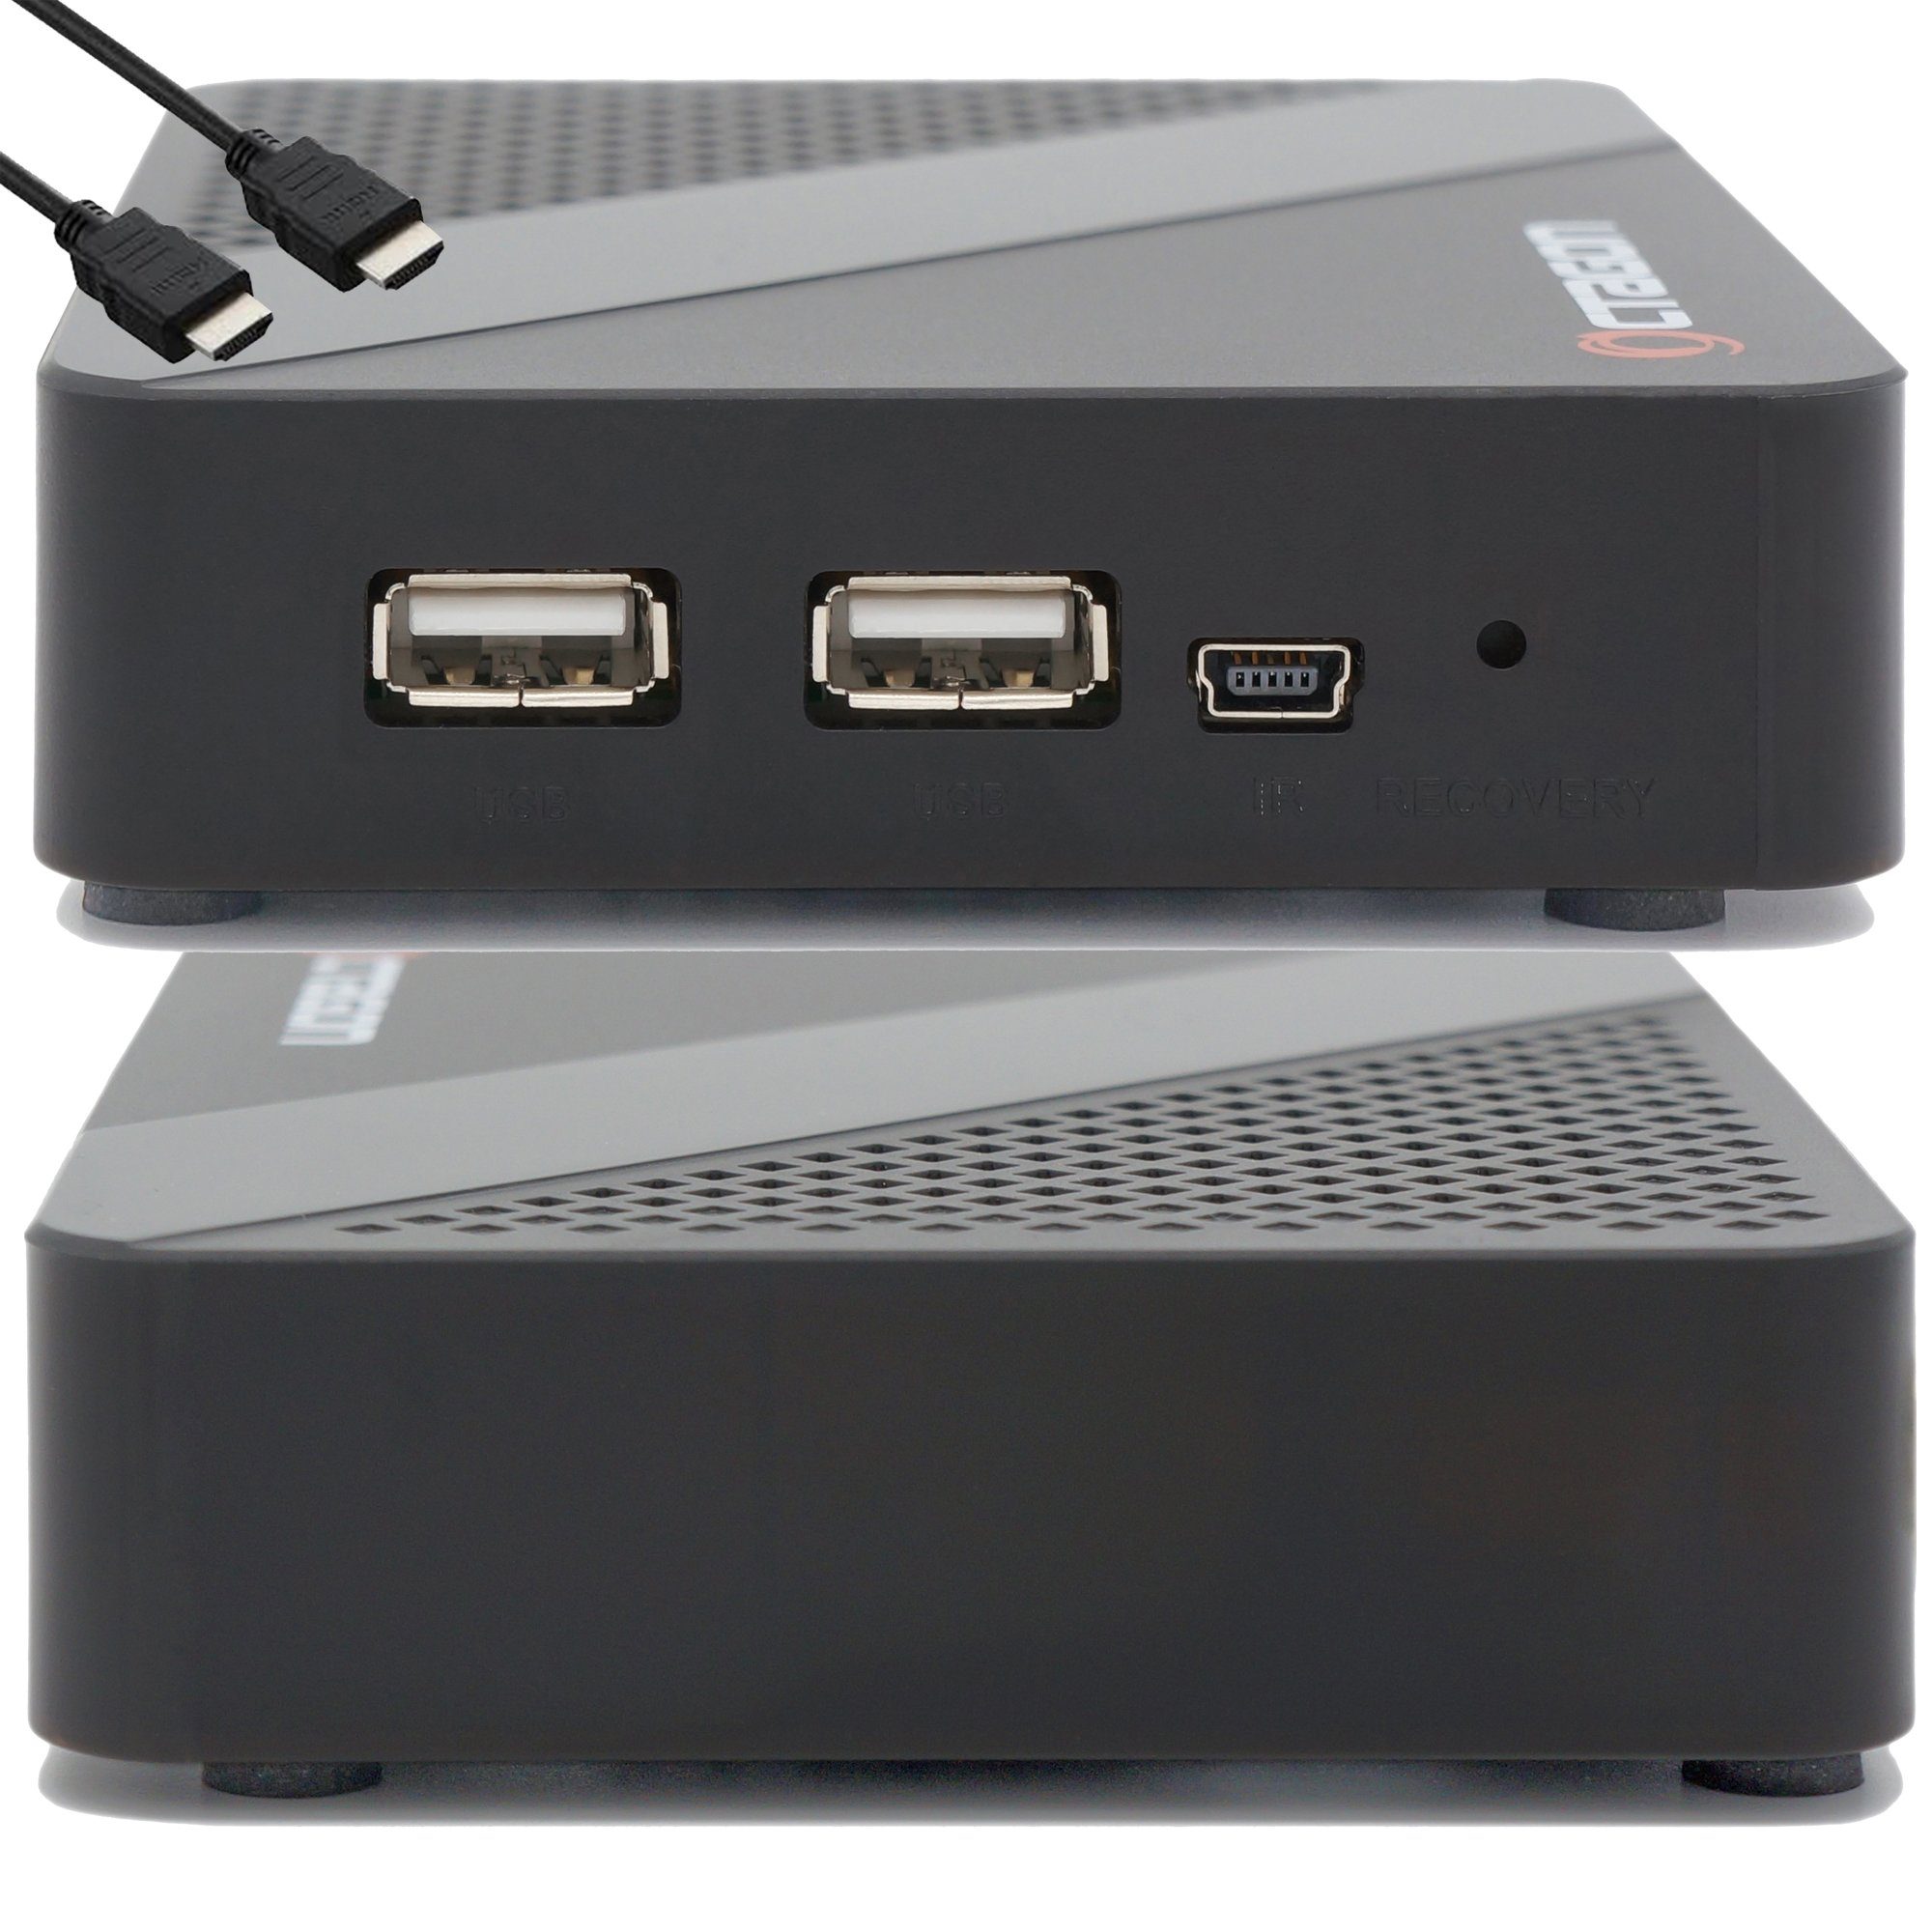 Streaming-Box IPTV Smart Box HD HEVC H.265 SX887 OCTAGON IP